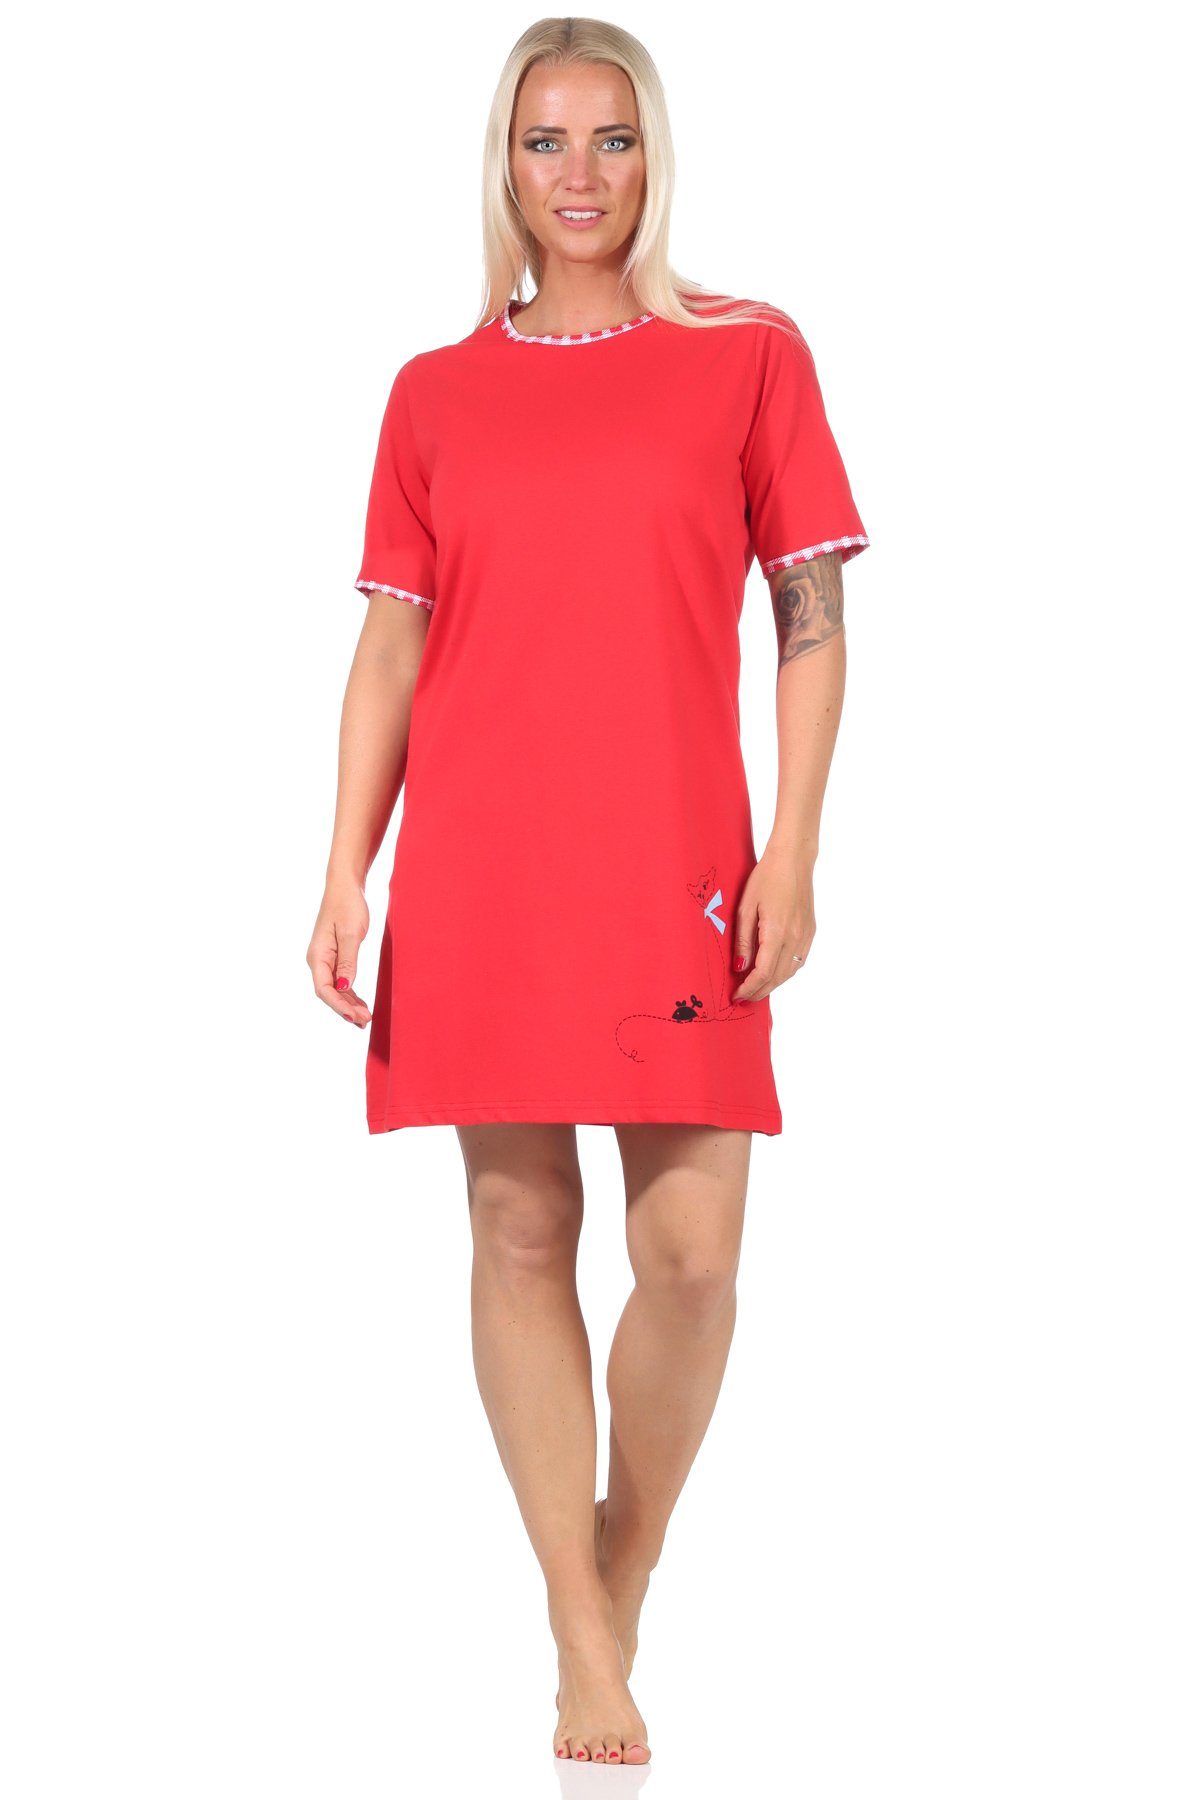 Normann Nachthemd Damen Nachthemd, kurzes Bigshirt mit süßer Katzen-Applikation - 66335 rot